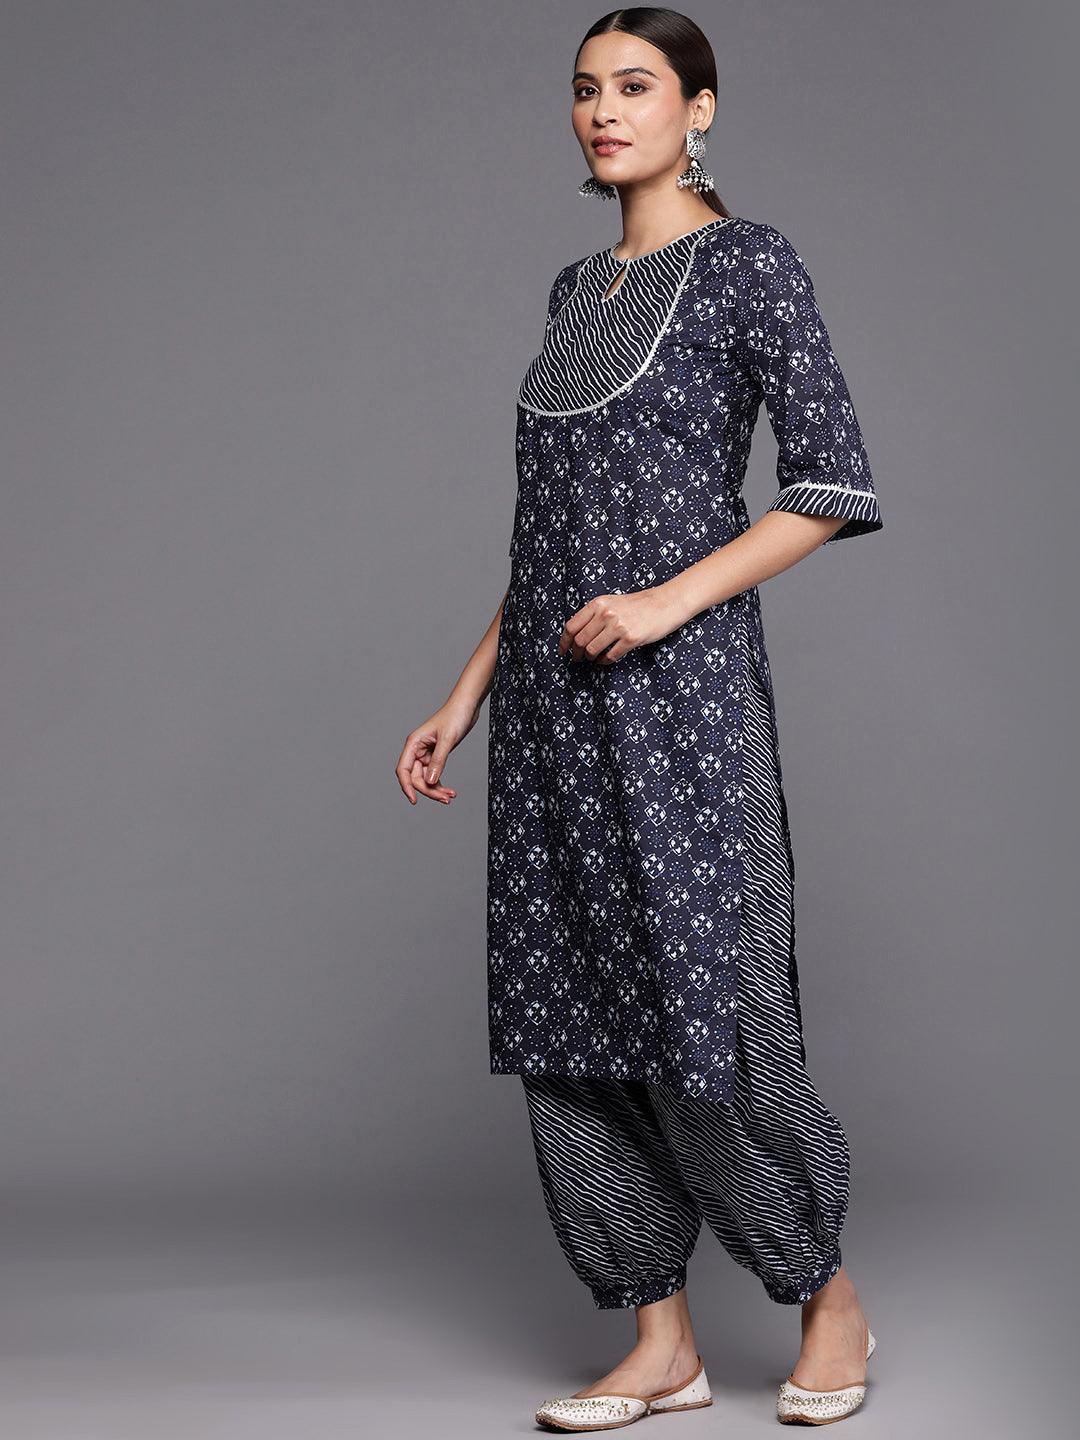 Blue Yoke Design Cotton Straight Kurta With Salwar & Dupatta